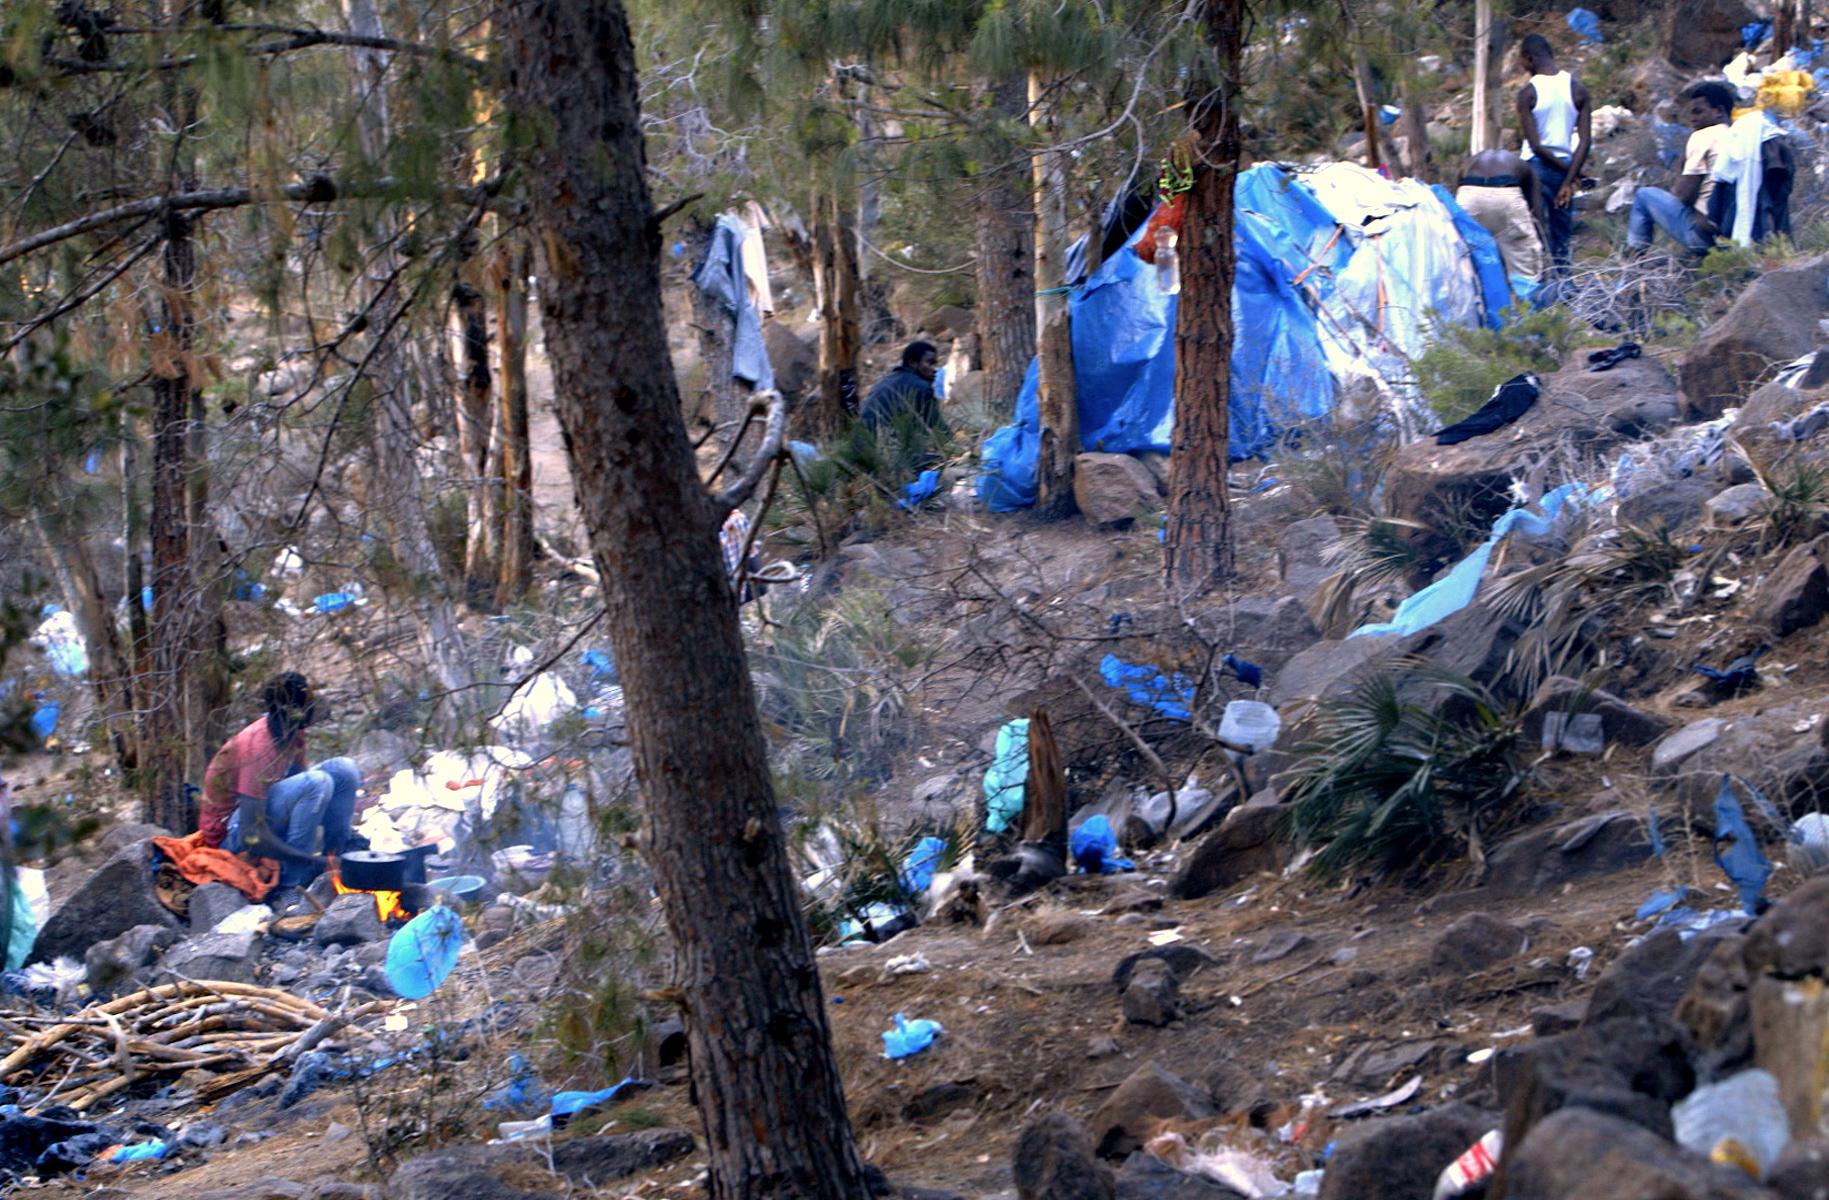 Moroccan migrant camp